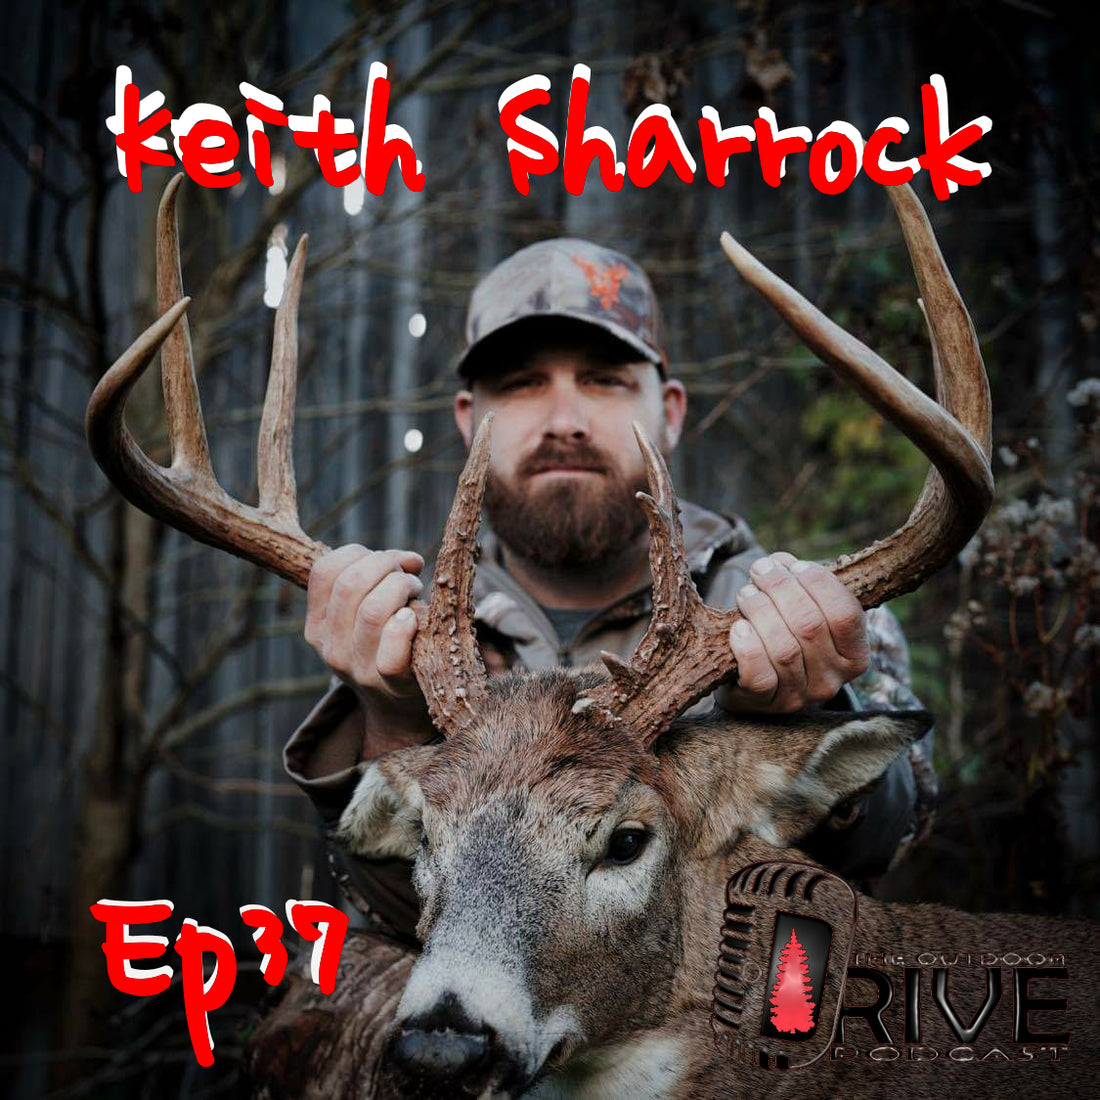 Keith Sharrock - Tattooed In The Wild